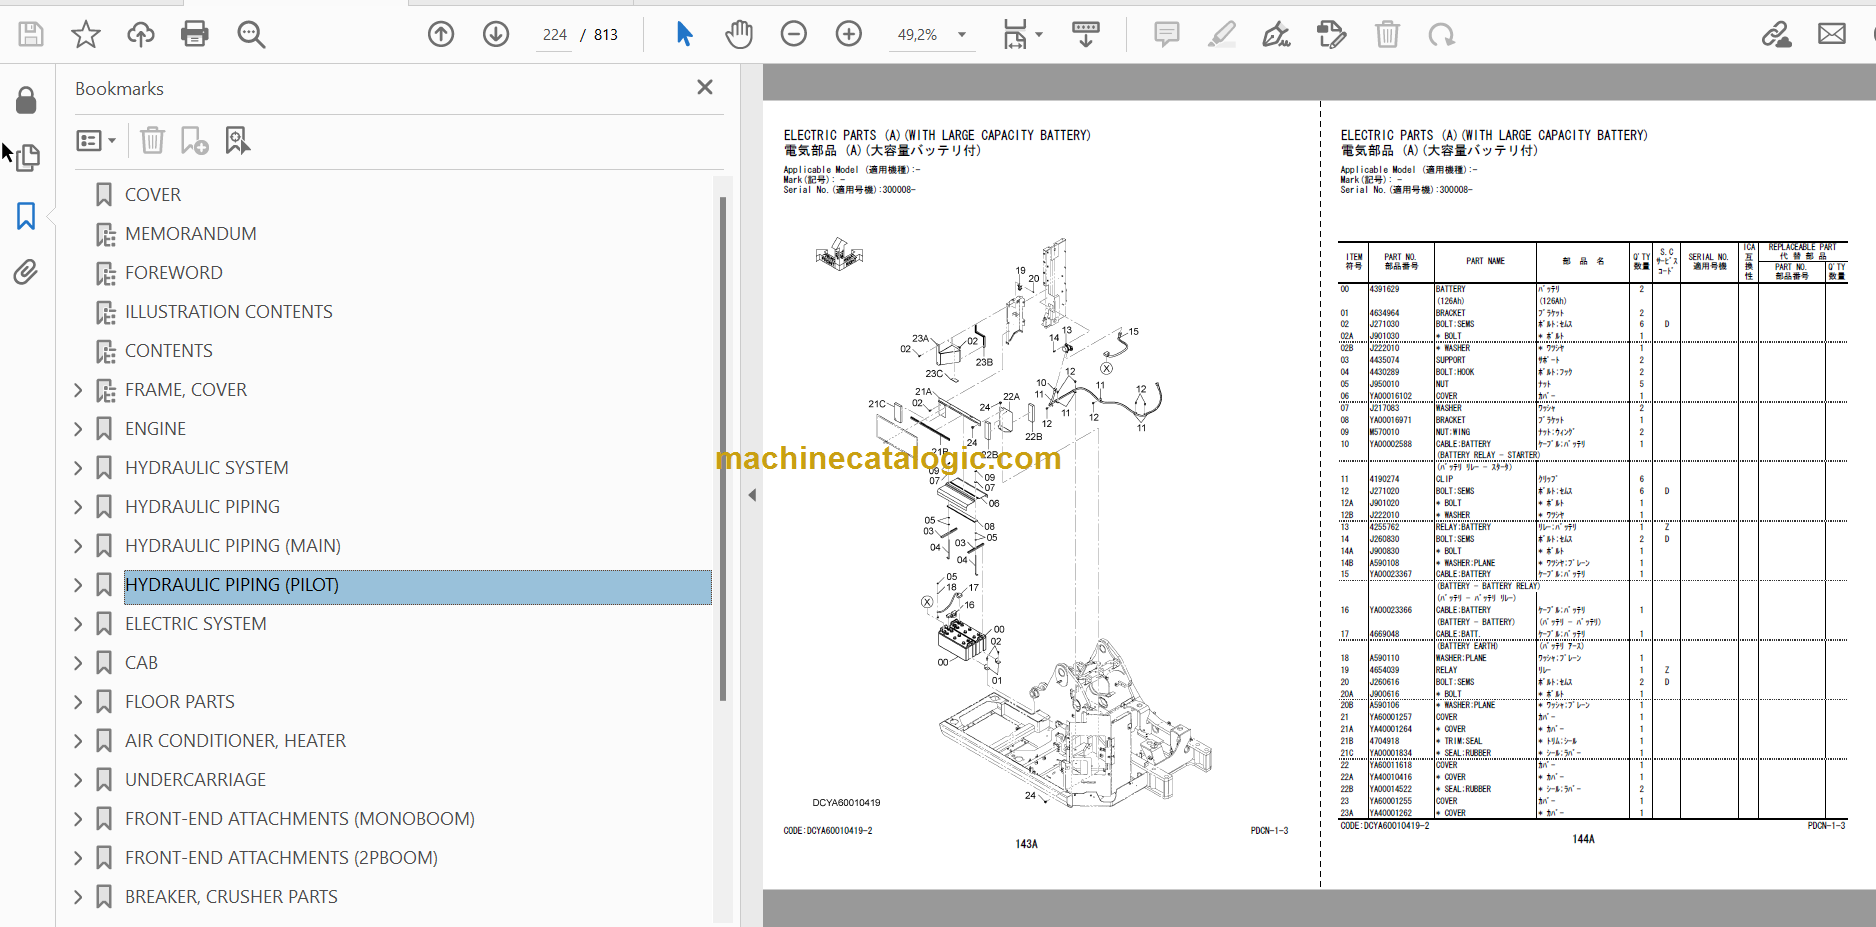 Hitachi ZX225US-5B ZX225USLC-5B Parts Catalog & Equipment 